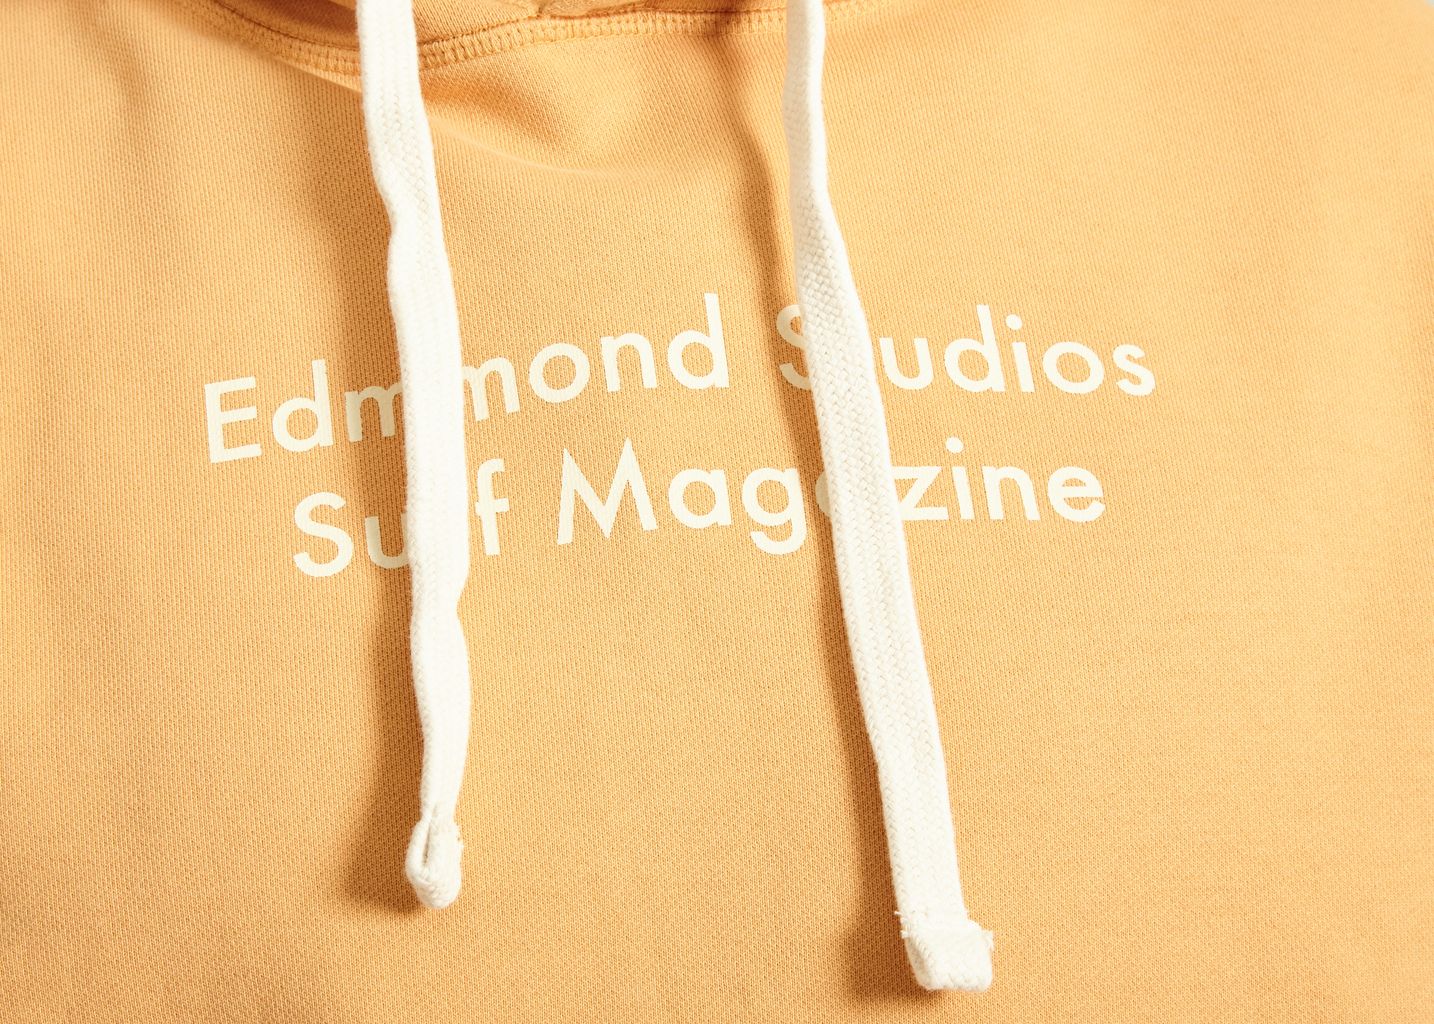 Hoodie Studio Surf Magazine - Edmmond Studios